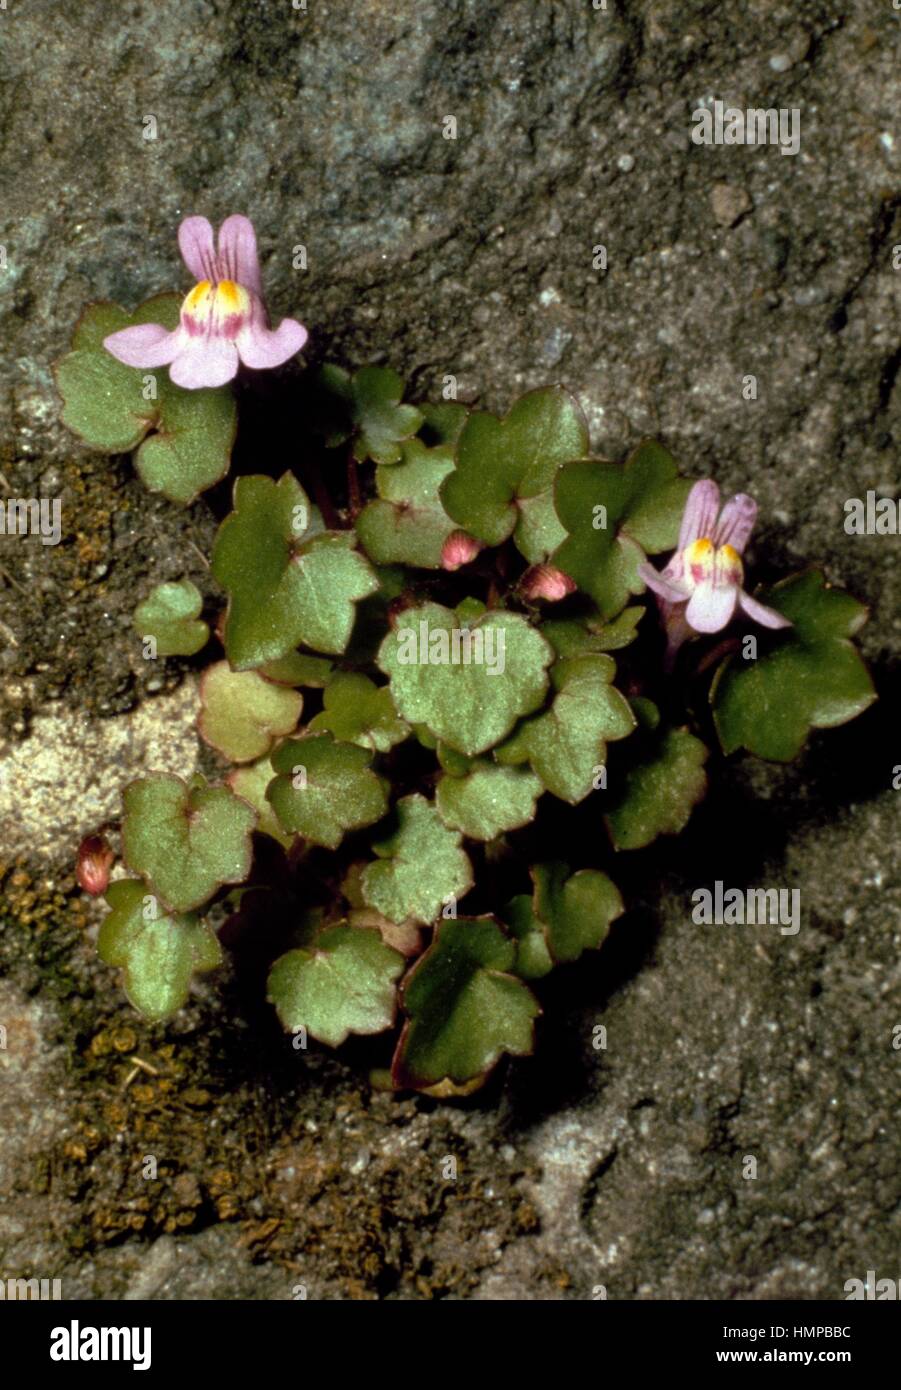 Ivy-leaved toadflax or Kenilworth ivy (Linaria cymbalaria or Cymbalaria muralis), Scrophulariaceae. Stock Photo